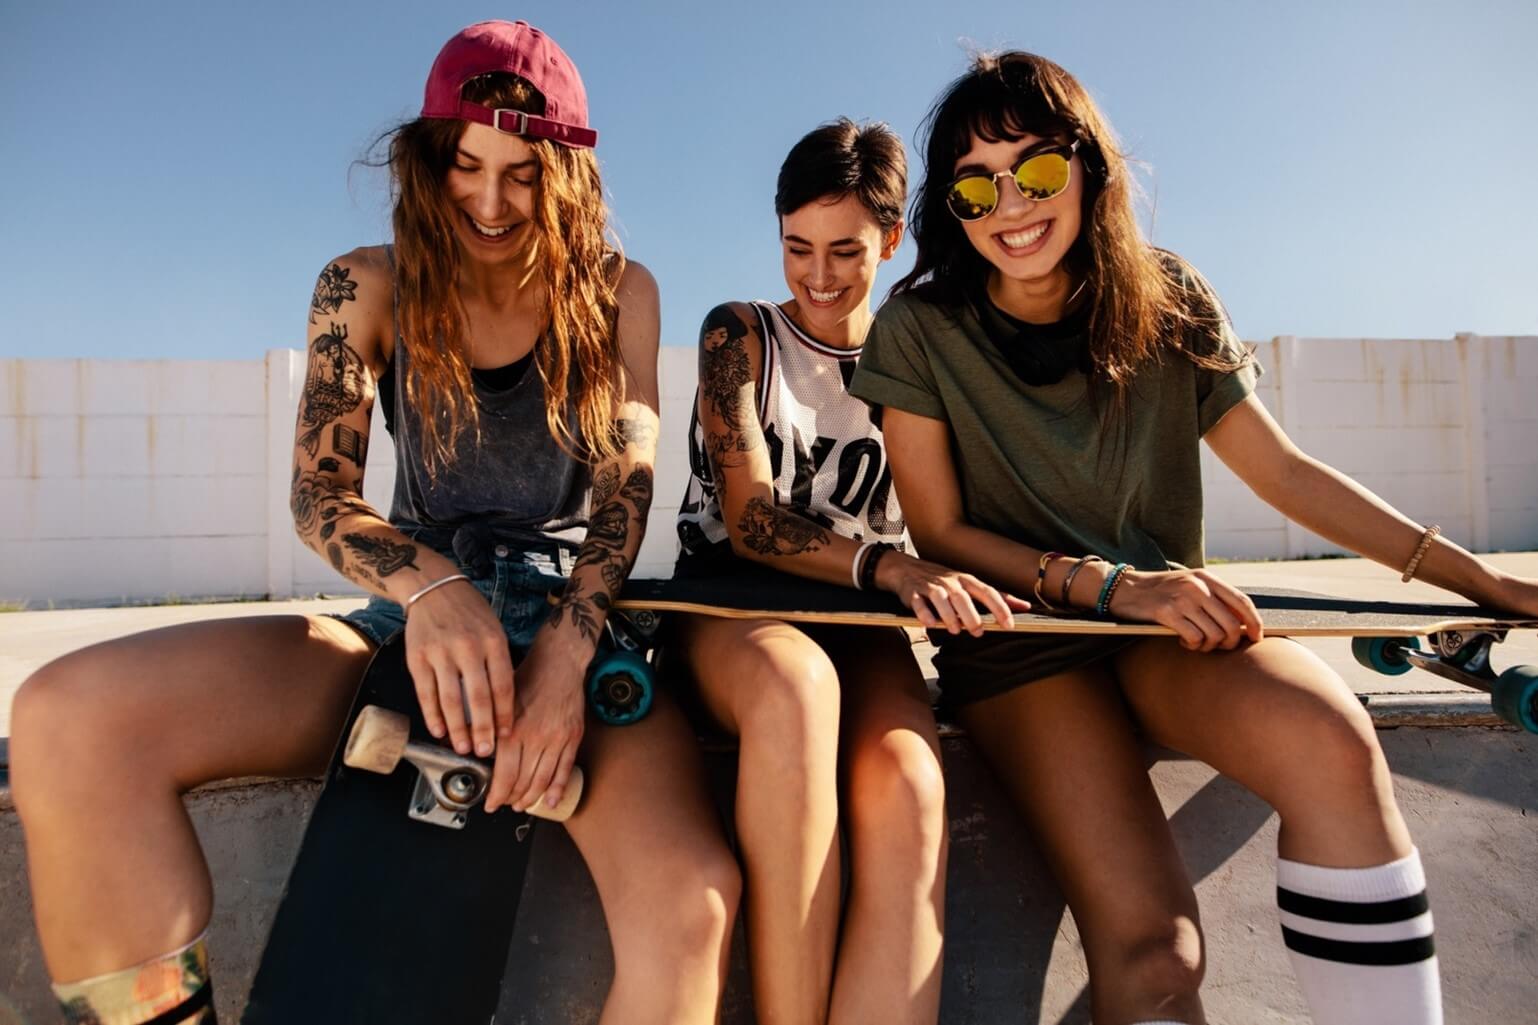 three girls skateboarding